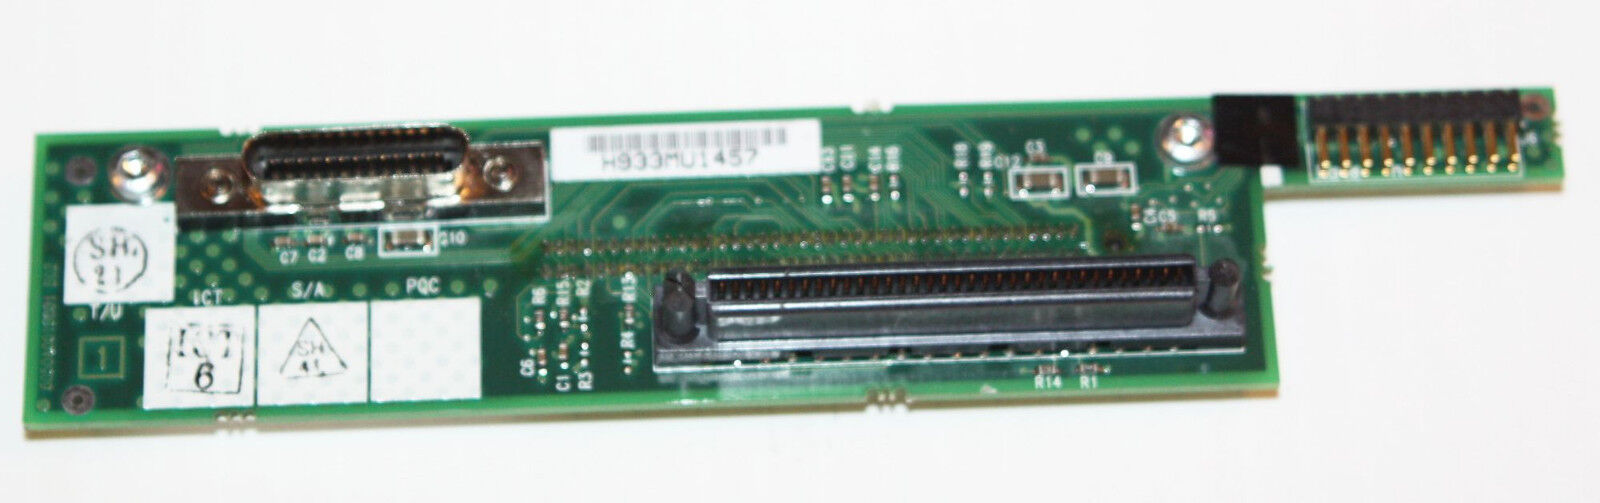 Riser Backplane Board 6050a0019001--HP Compaq Proliant DL320 1U Rack Server